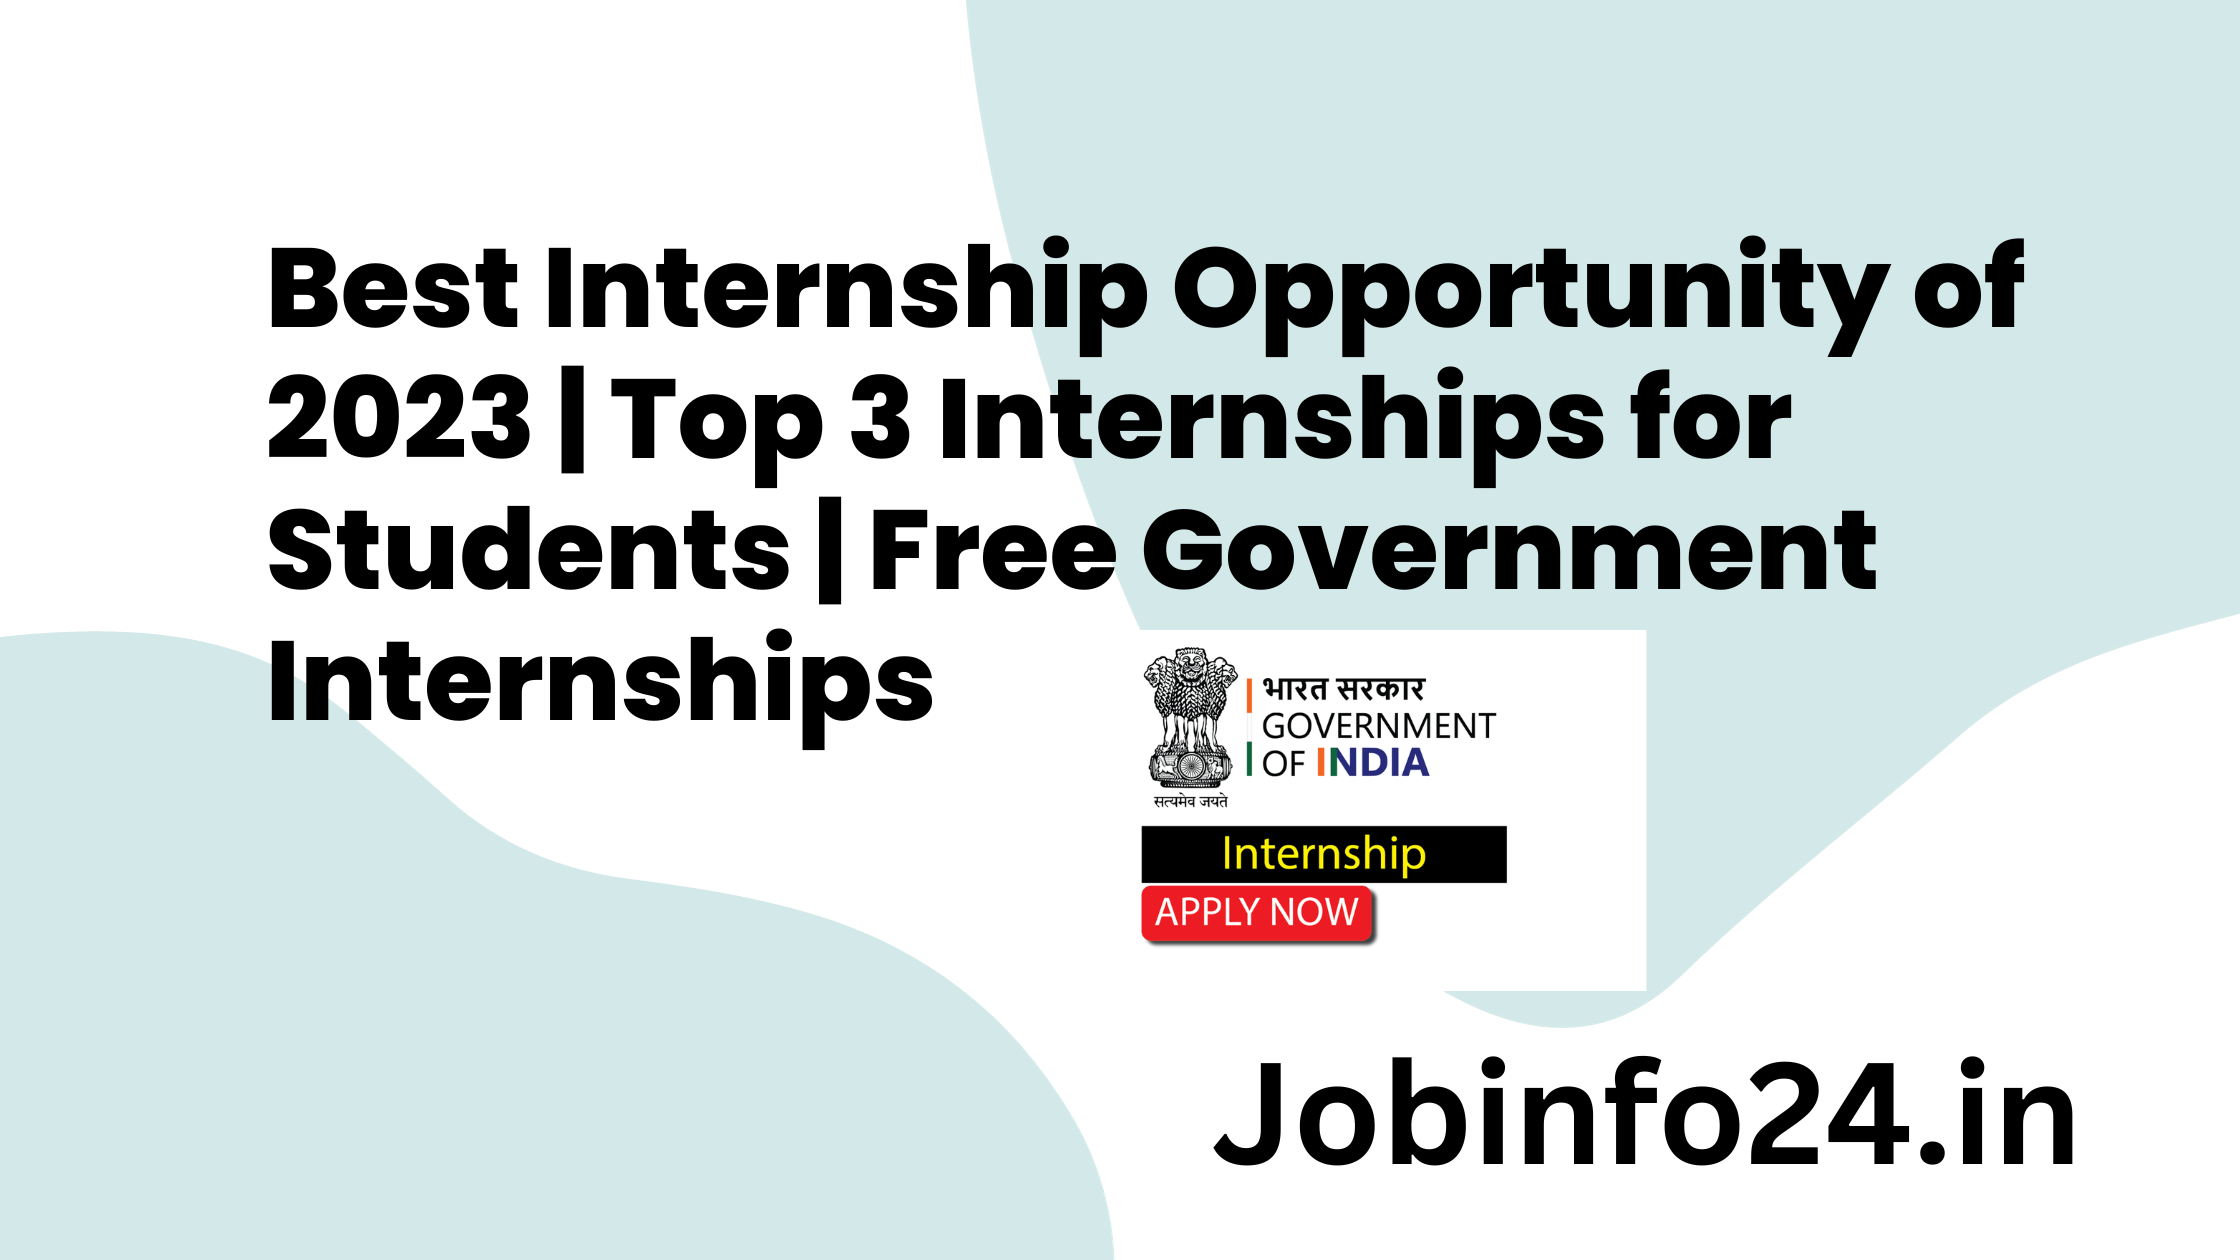 Best Internship Opportunity of 2023 | Top 3 Internships for Students | Free Government Internships